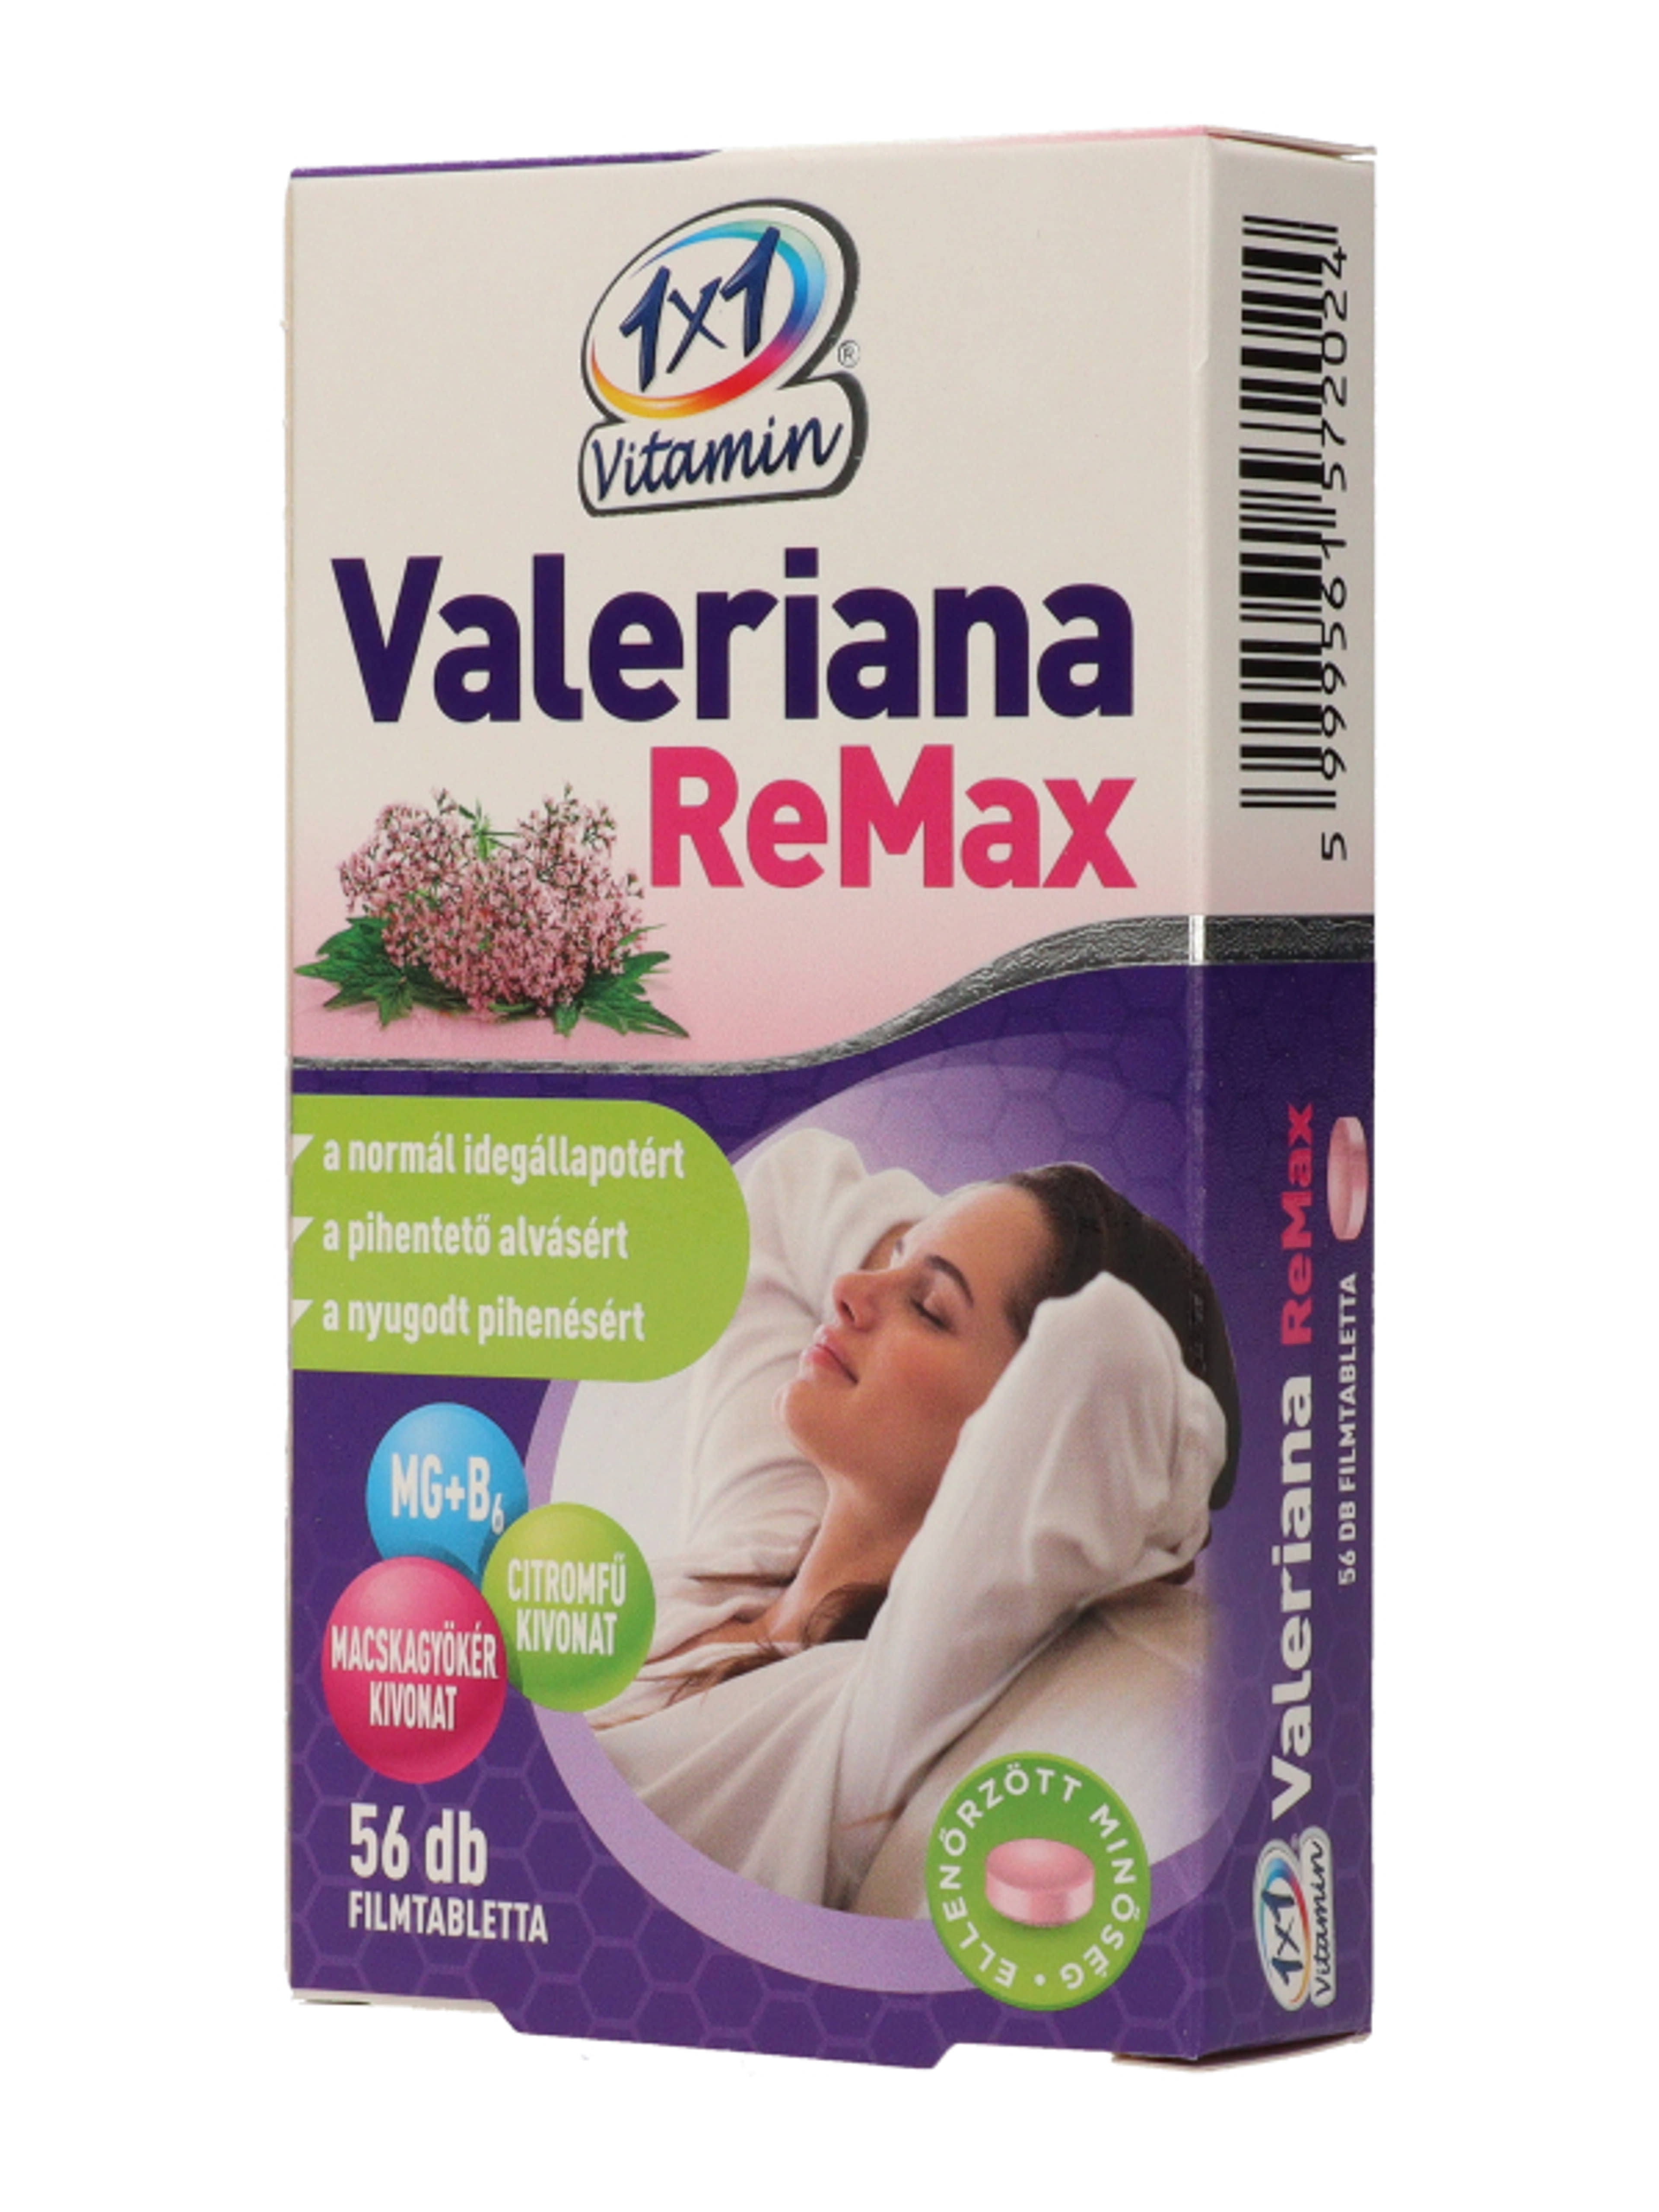 1x1 vitamin valeriana remax étrend-kiegészítő filmtabletta - 56 db-3